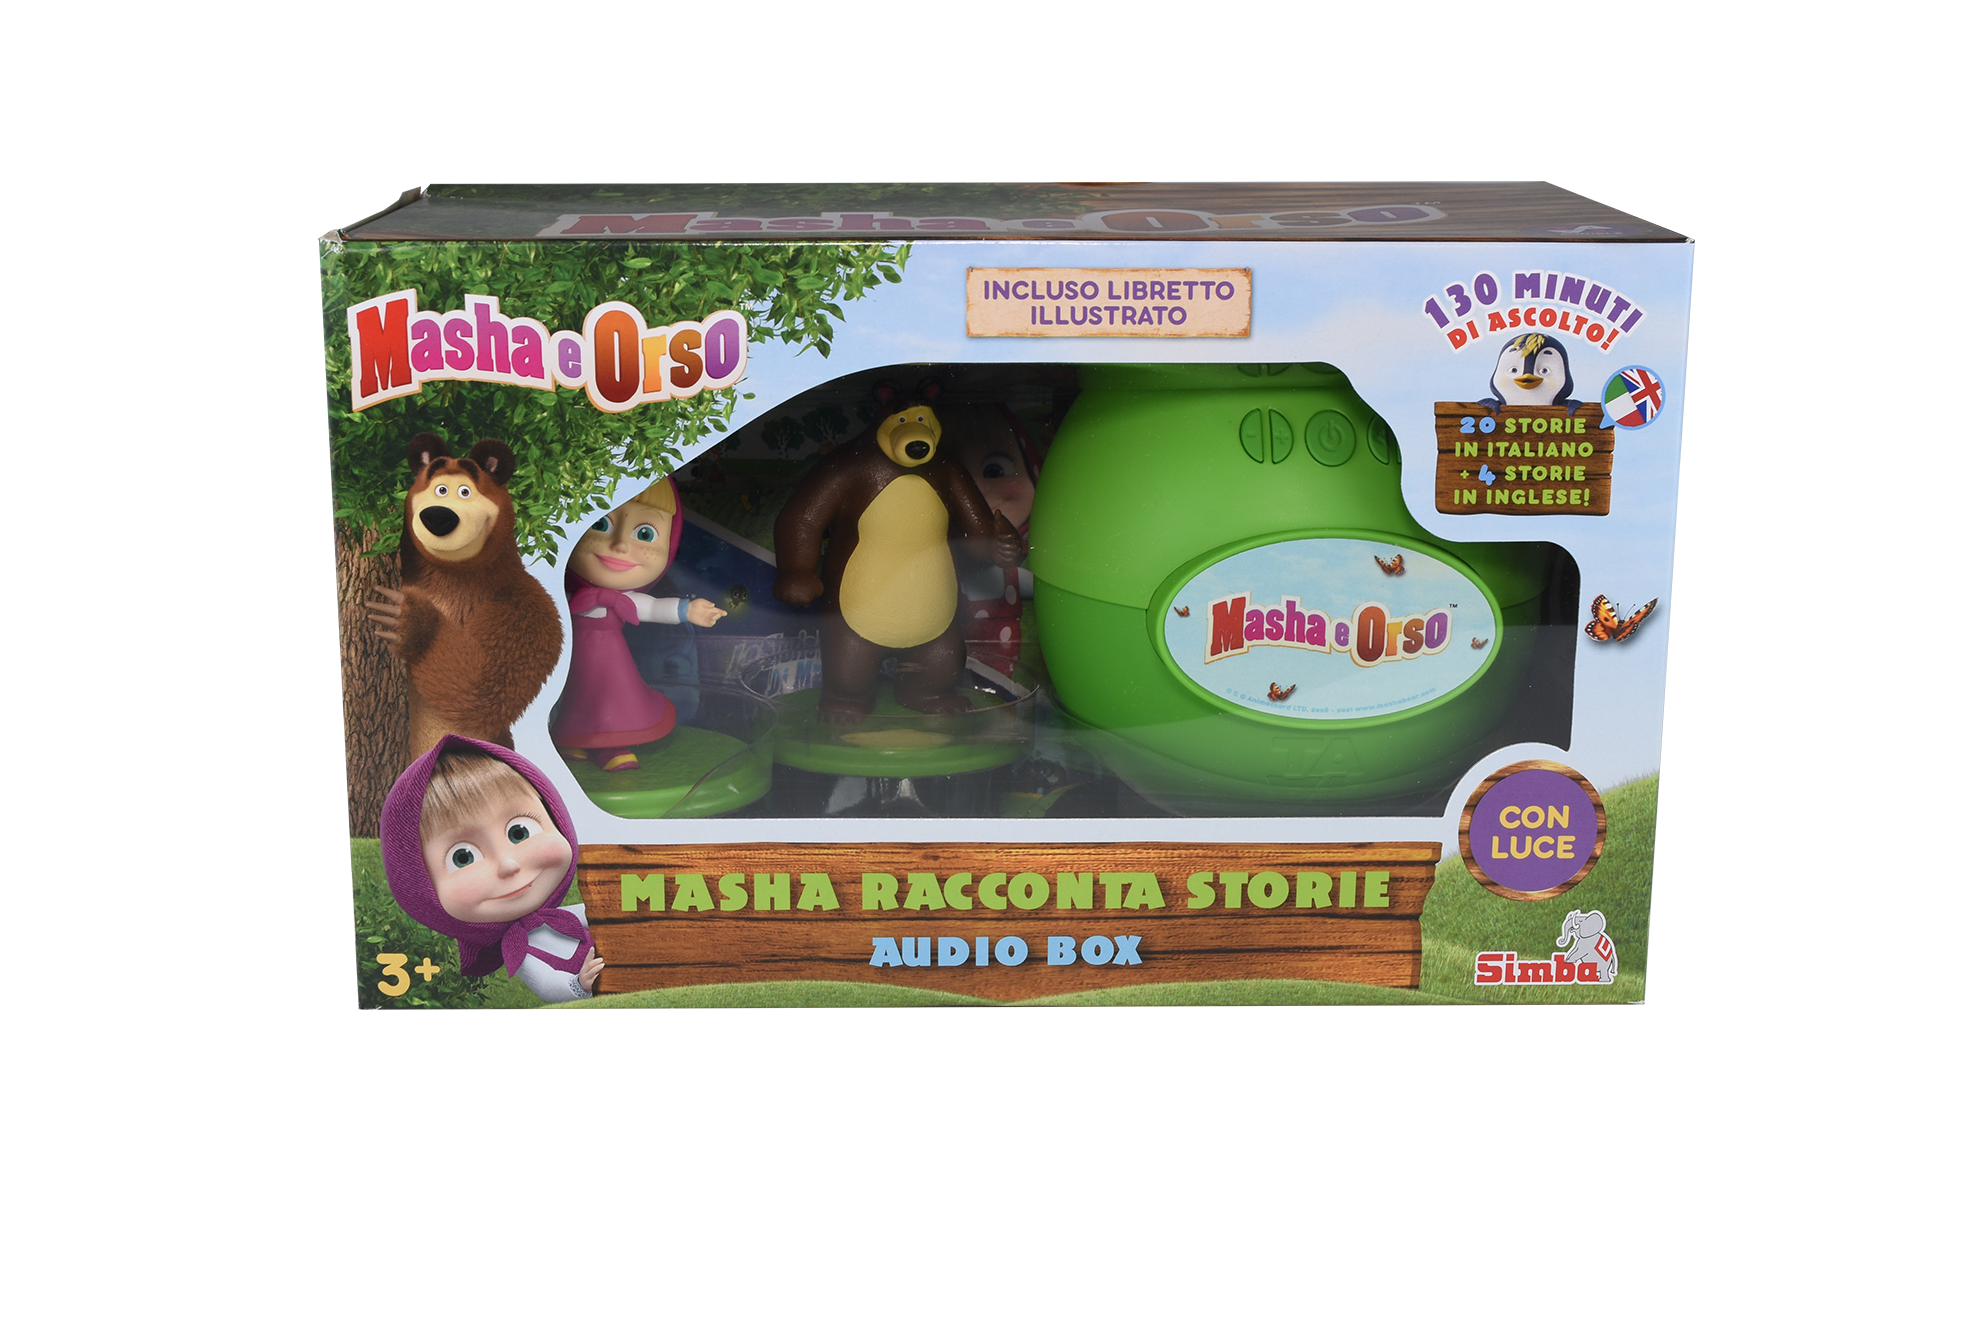 MASHA RACCONTA STORIE - AUDIBLE BOX INCLUSE 24 STORIE - 130 MINUTI - Toys  Center